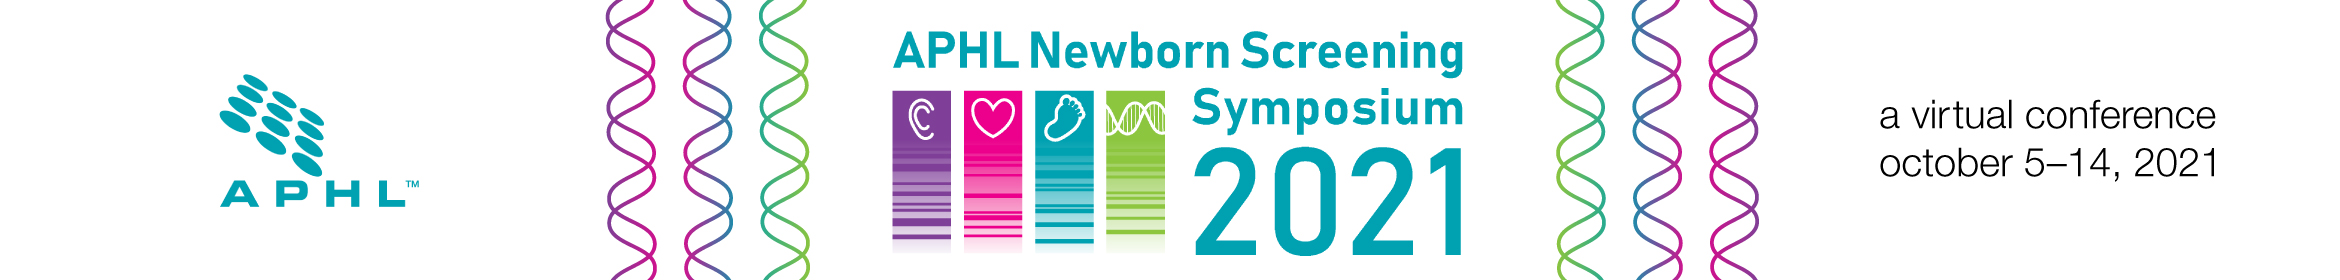 APHL 2021 Newborn Screening Symposium Main banner